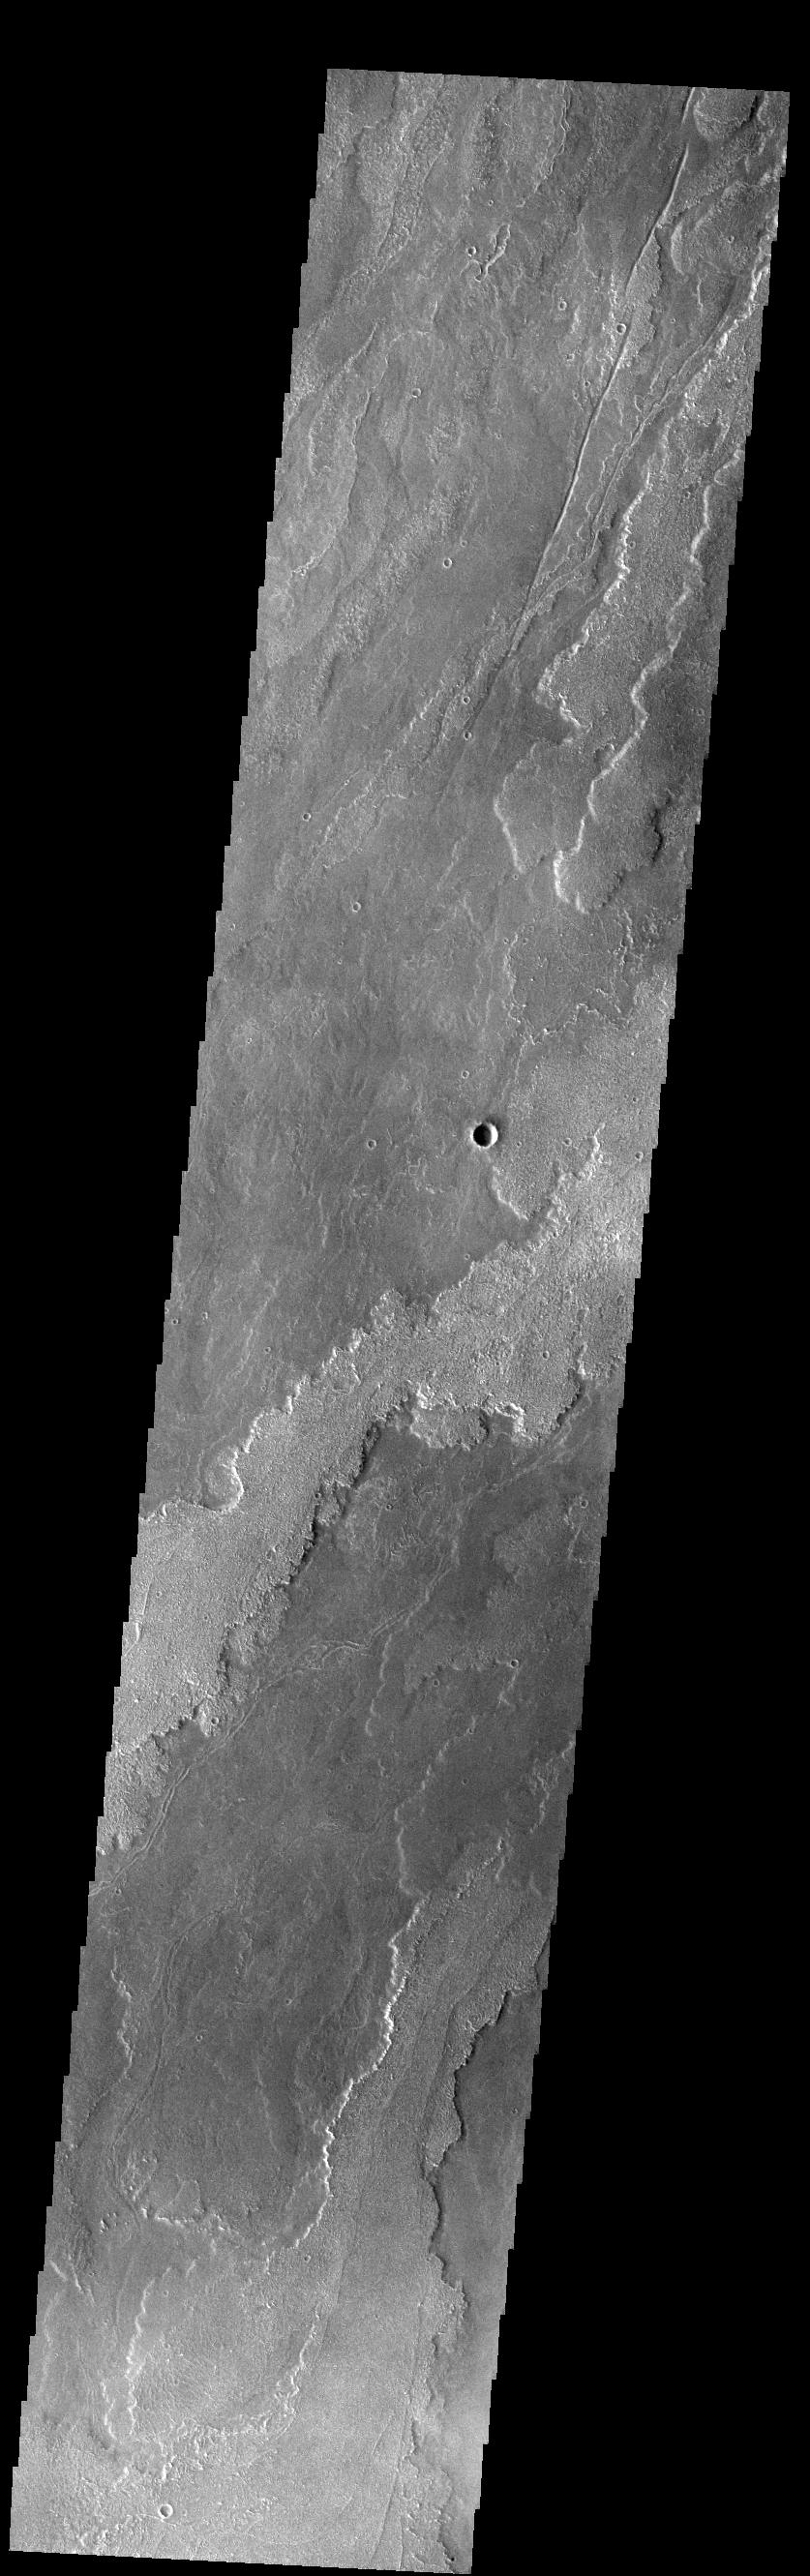 PIA24357: Daedalia Planum